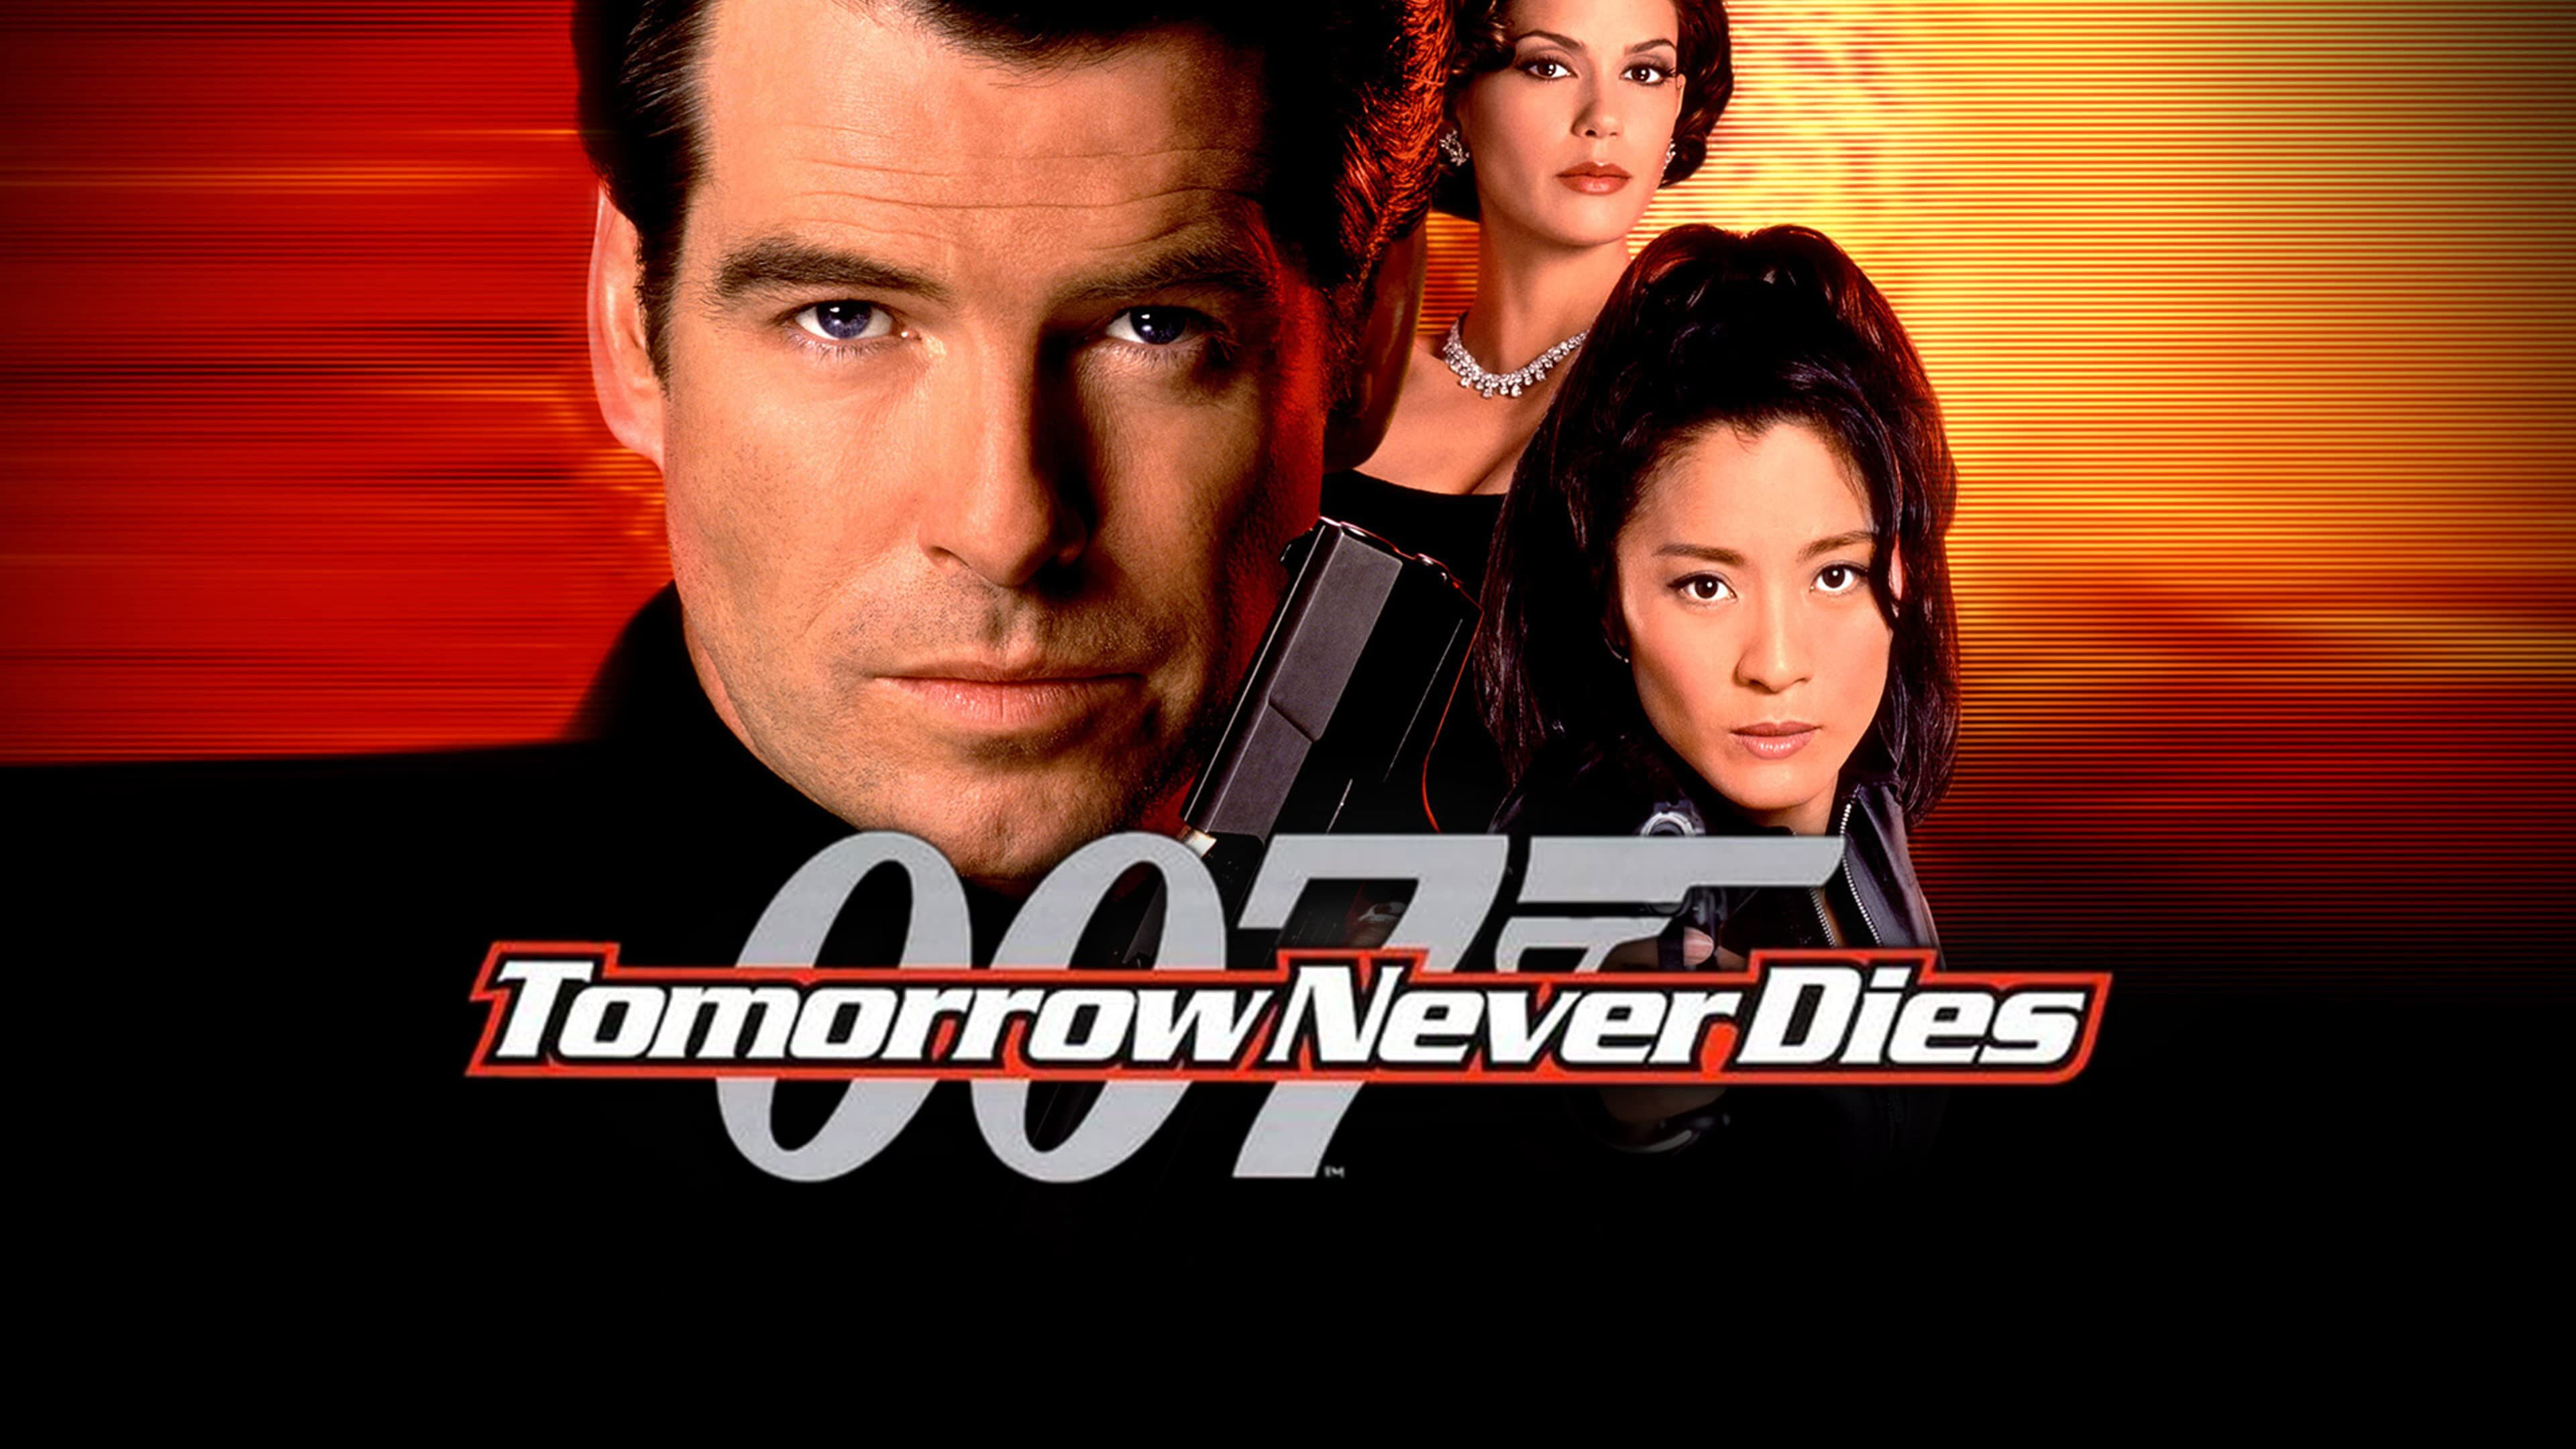 James Bond 007 Tomorrow Never Dies (1997)